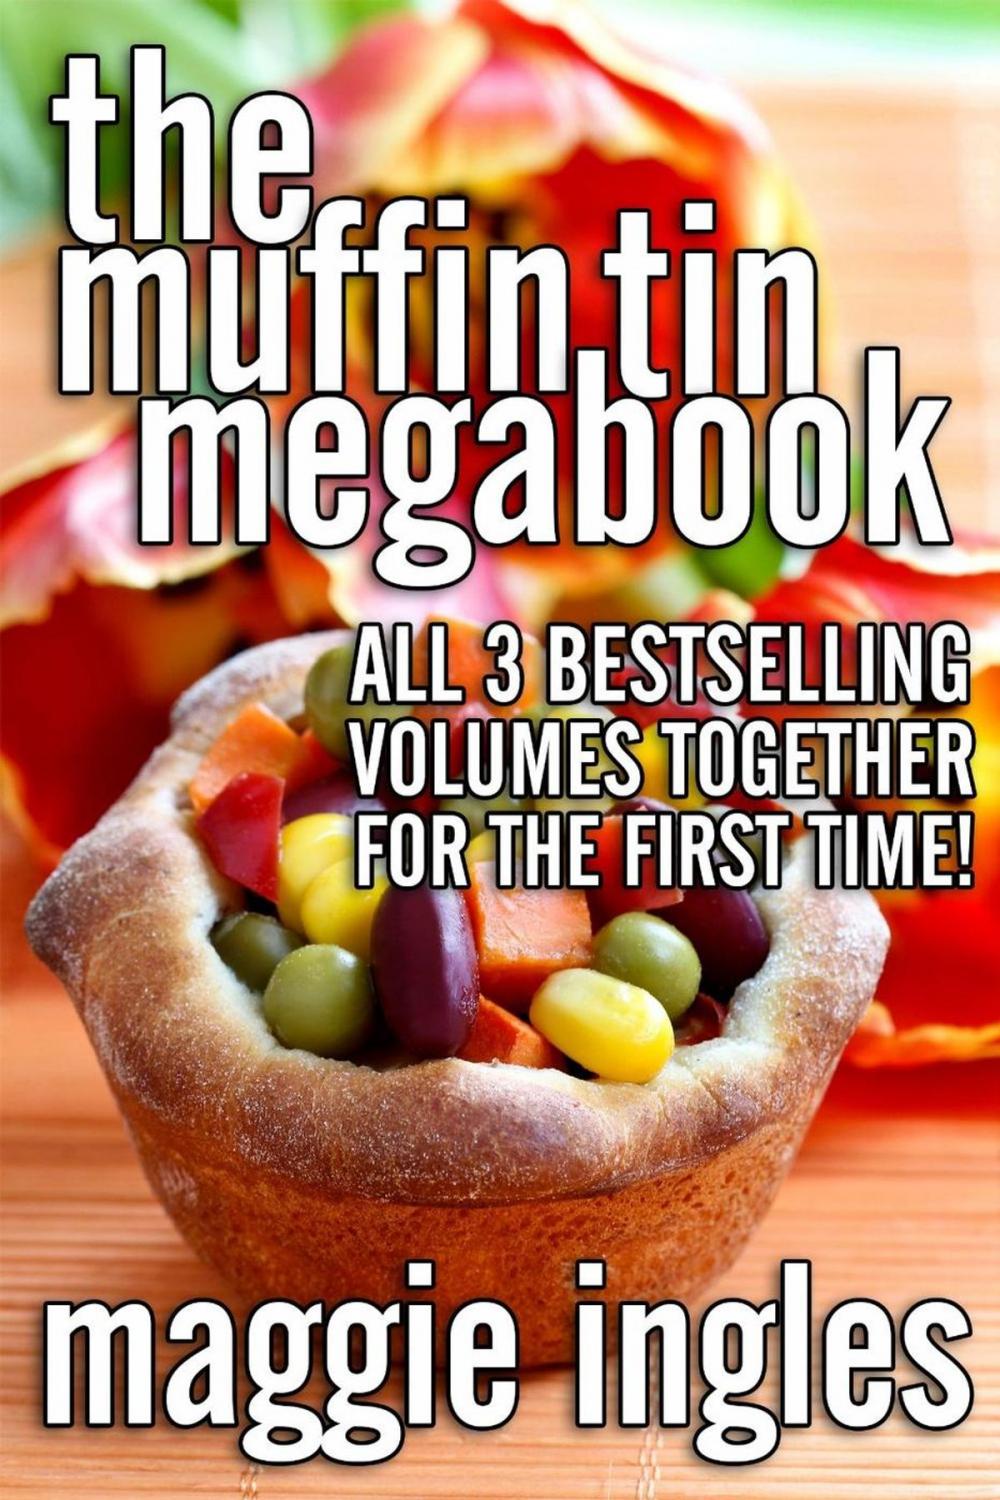 Big bigCover of Muffin Tin Megabook